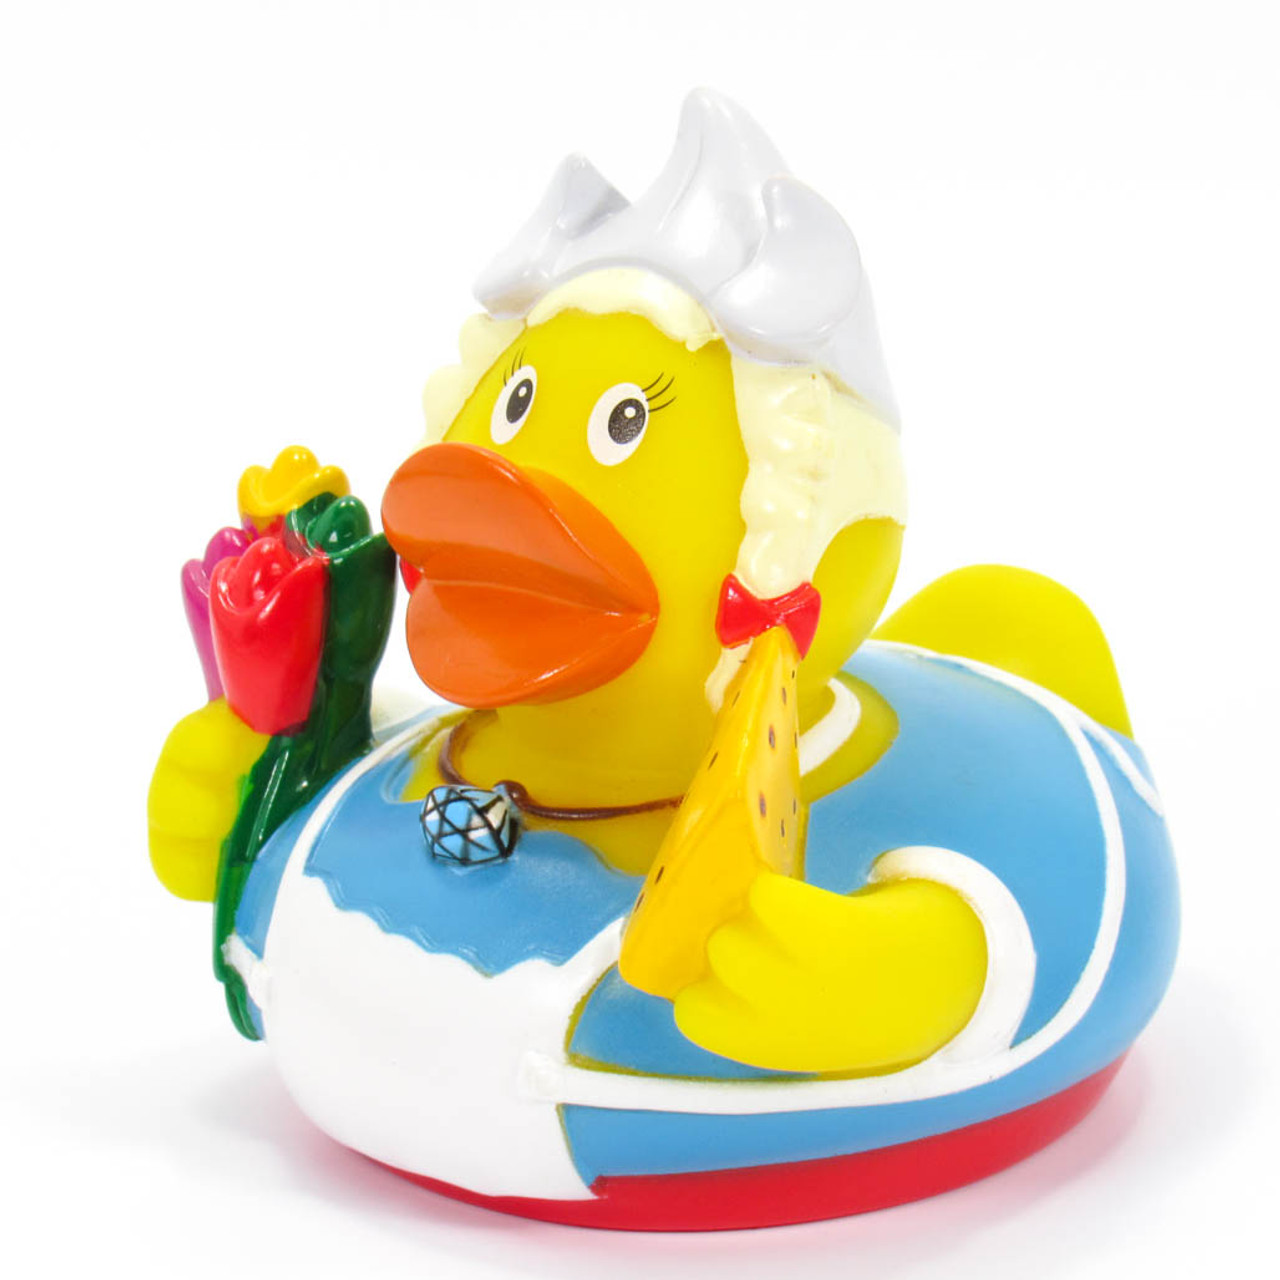 smokkel symbool Afspraak Holland Dutch Girl Rubber Duck | Quality Rubber Ducks Online